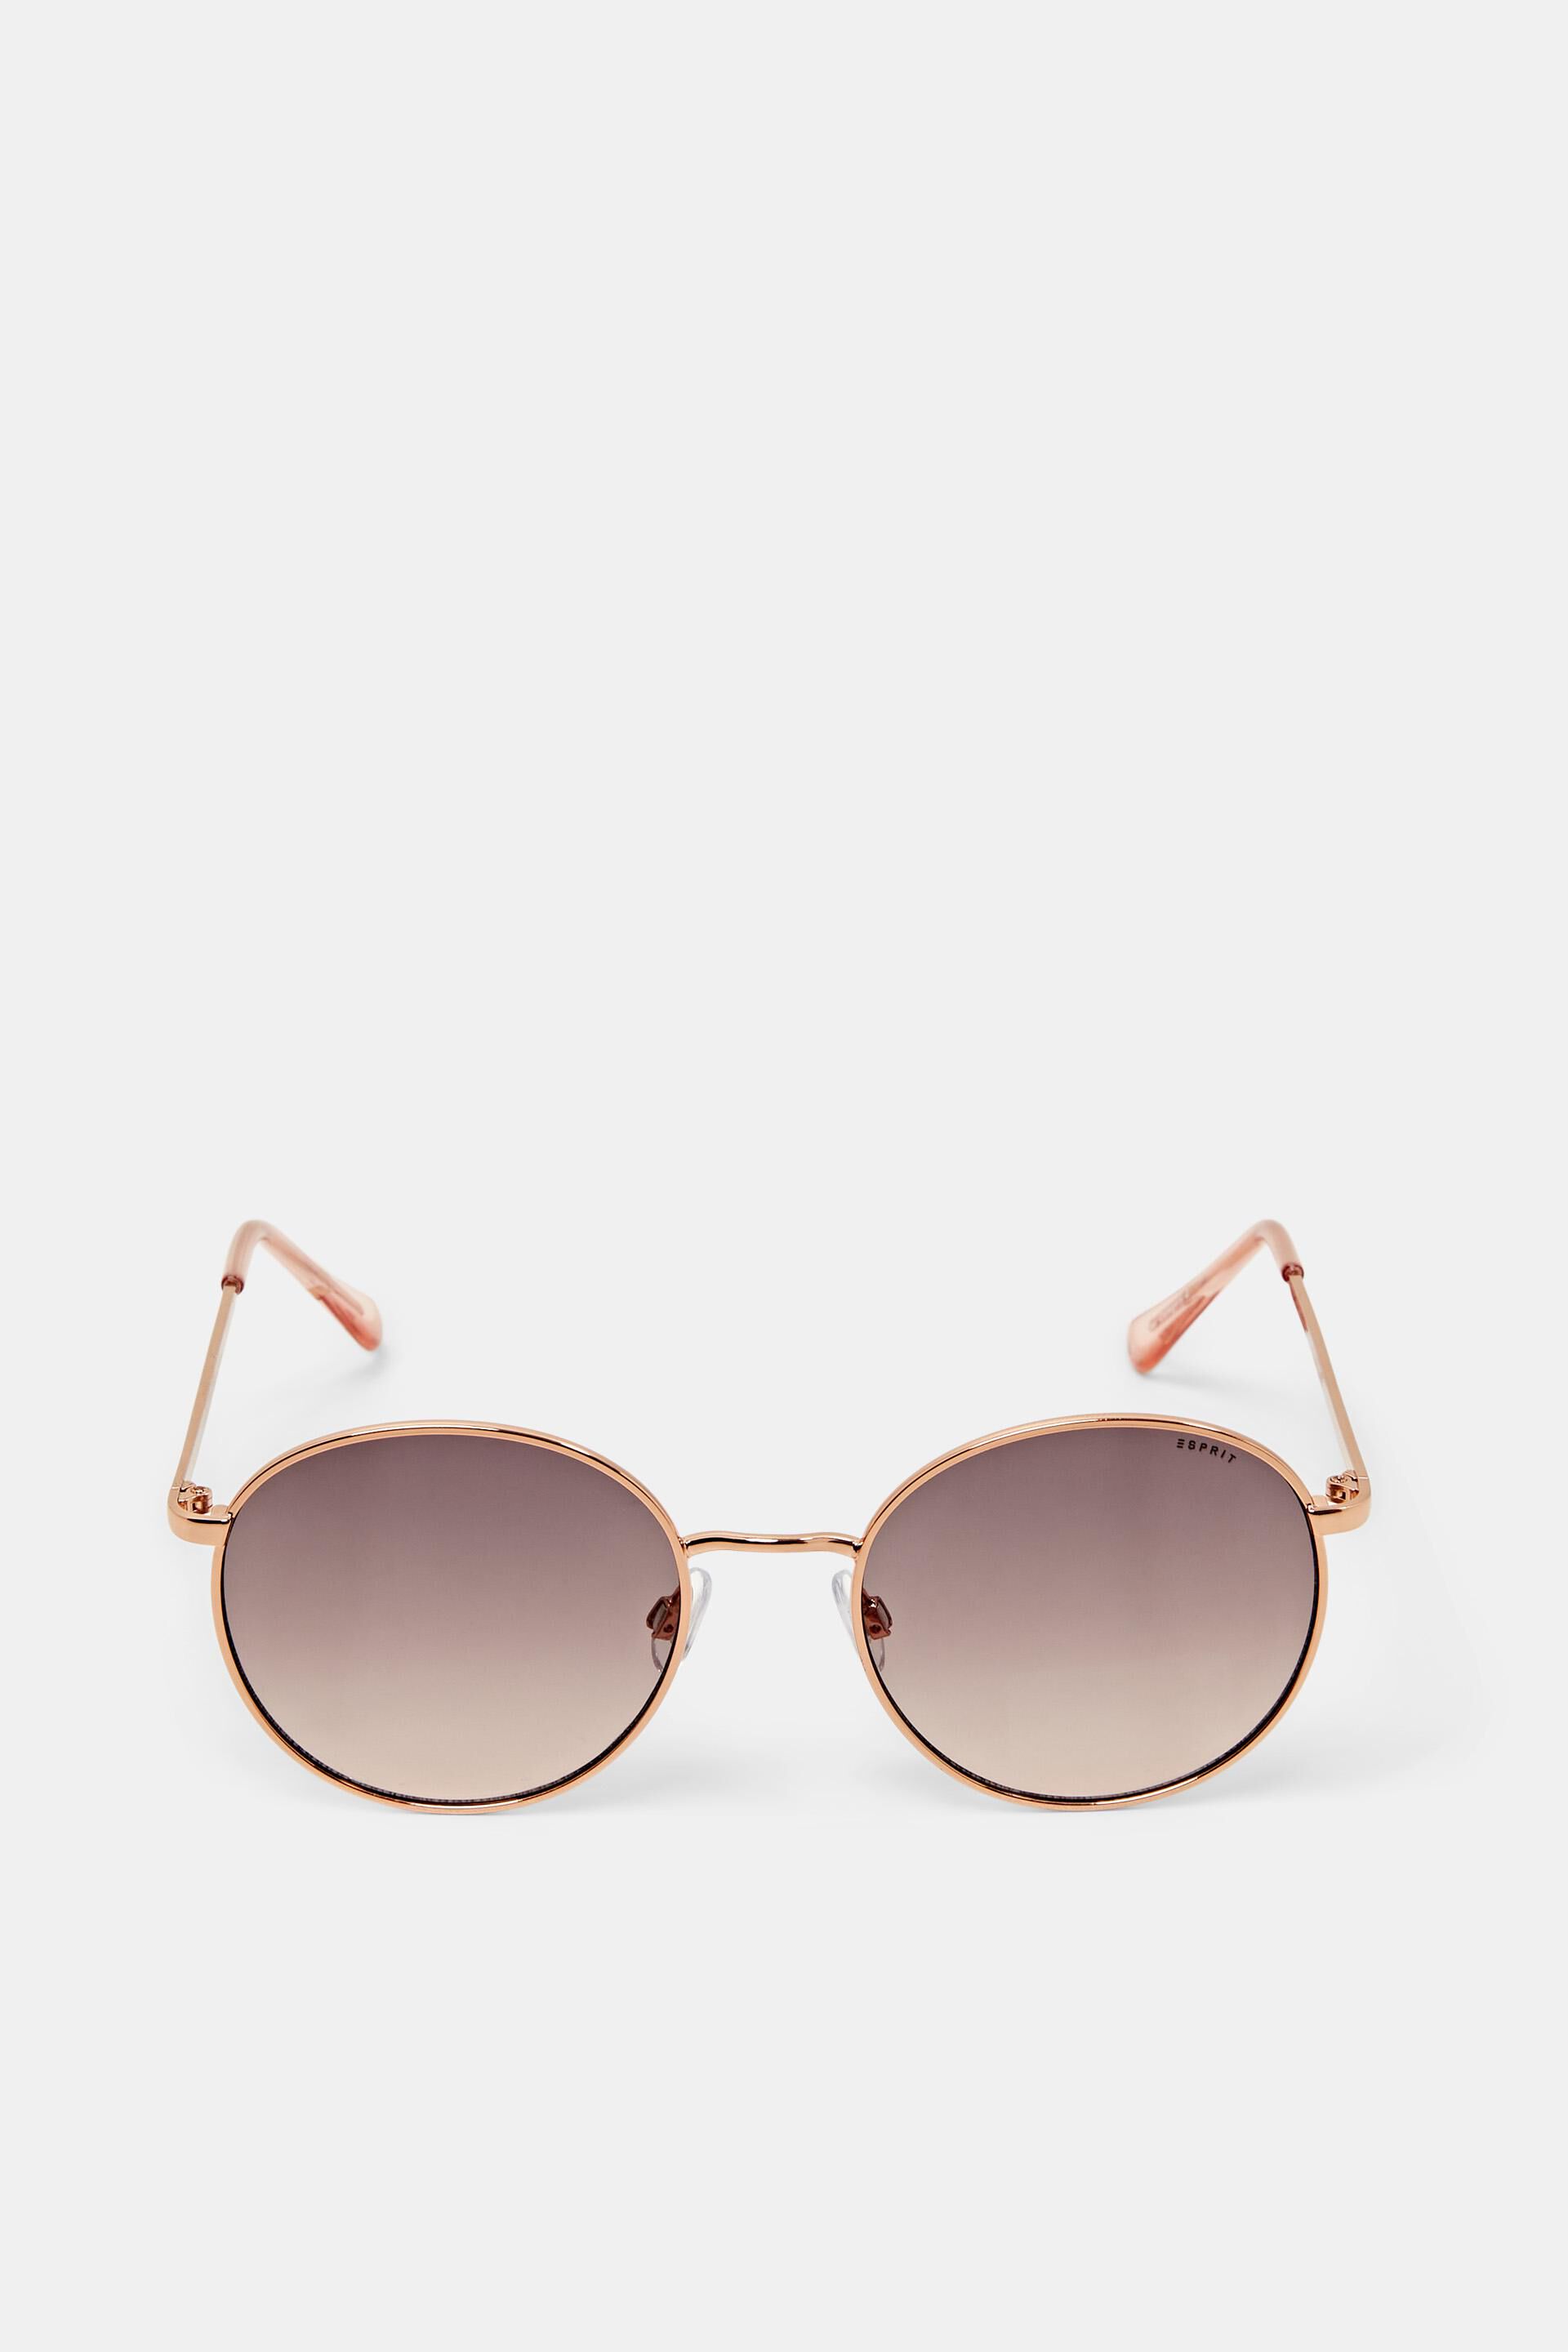 Esprit frames Sunglasses with metal